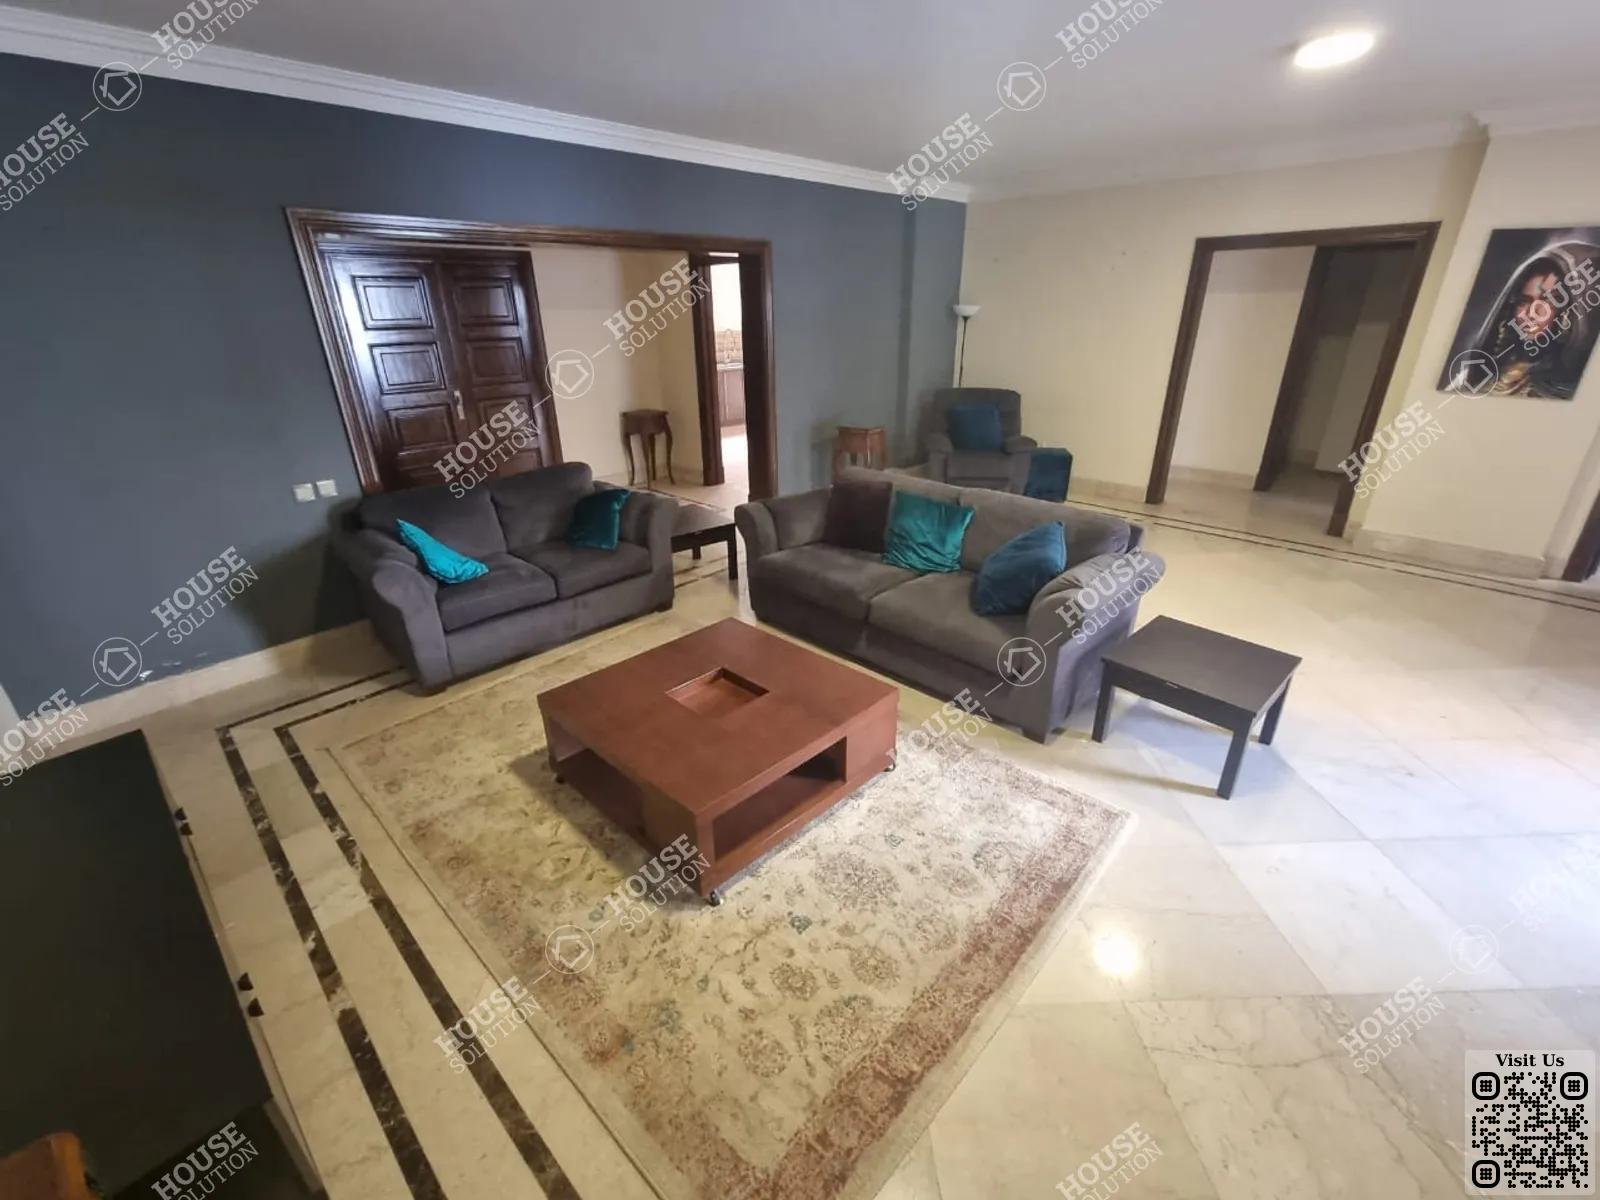 RECEPTION  @ Ground Floors For Rent In Maadi Maadi Sarayat Area: 300 m² consists of 4 Bedrooms 3 Bathrooms Modern furnished 5 stars #4590-0